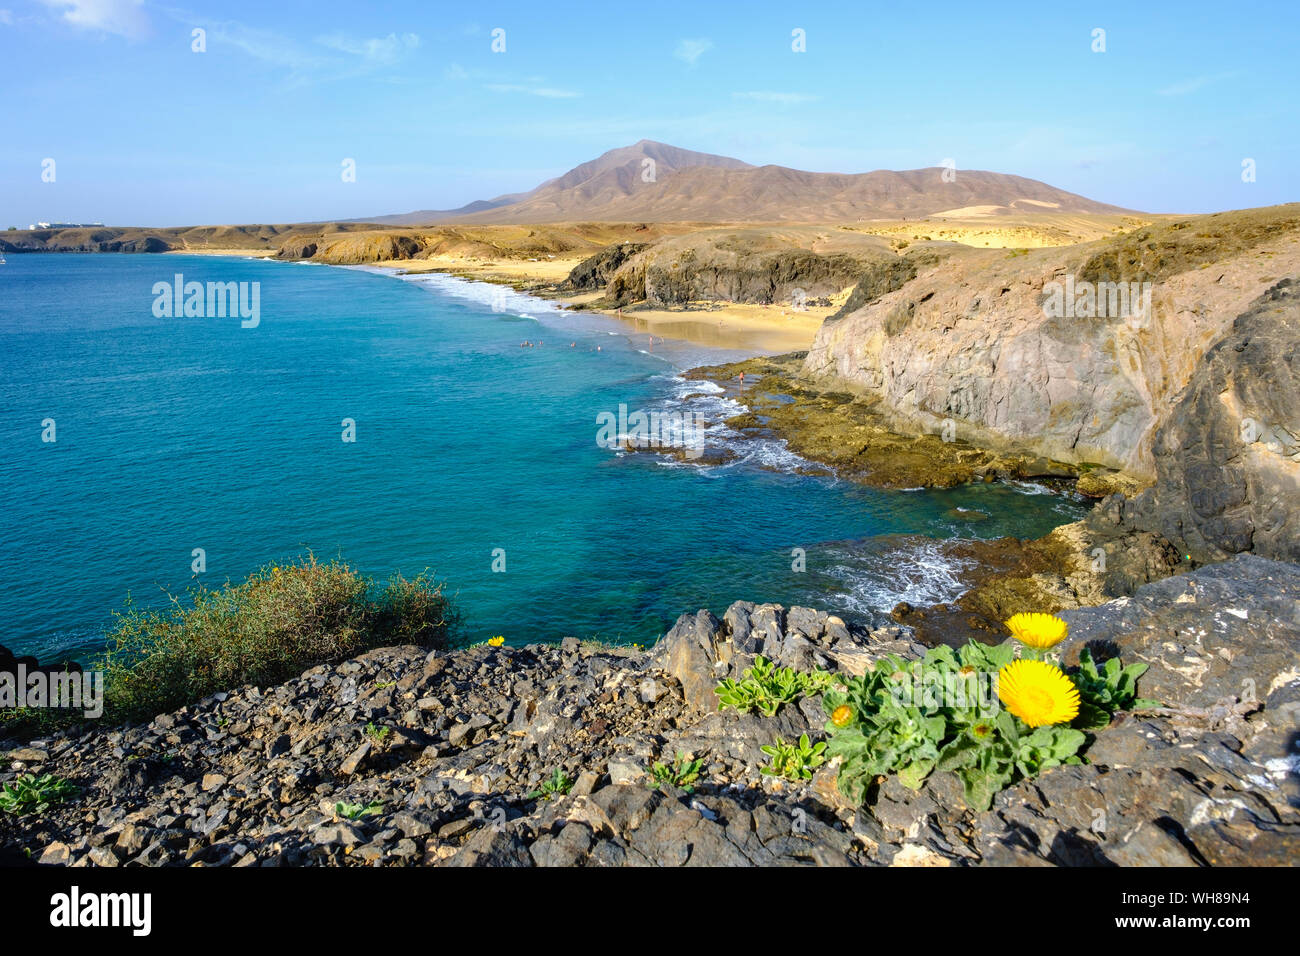 Playas de Papagayo, Lanzarote, Spain Stock Photo